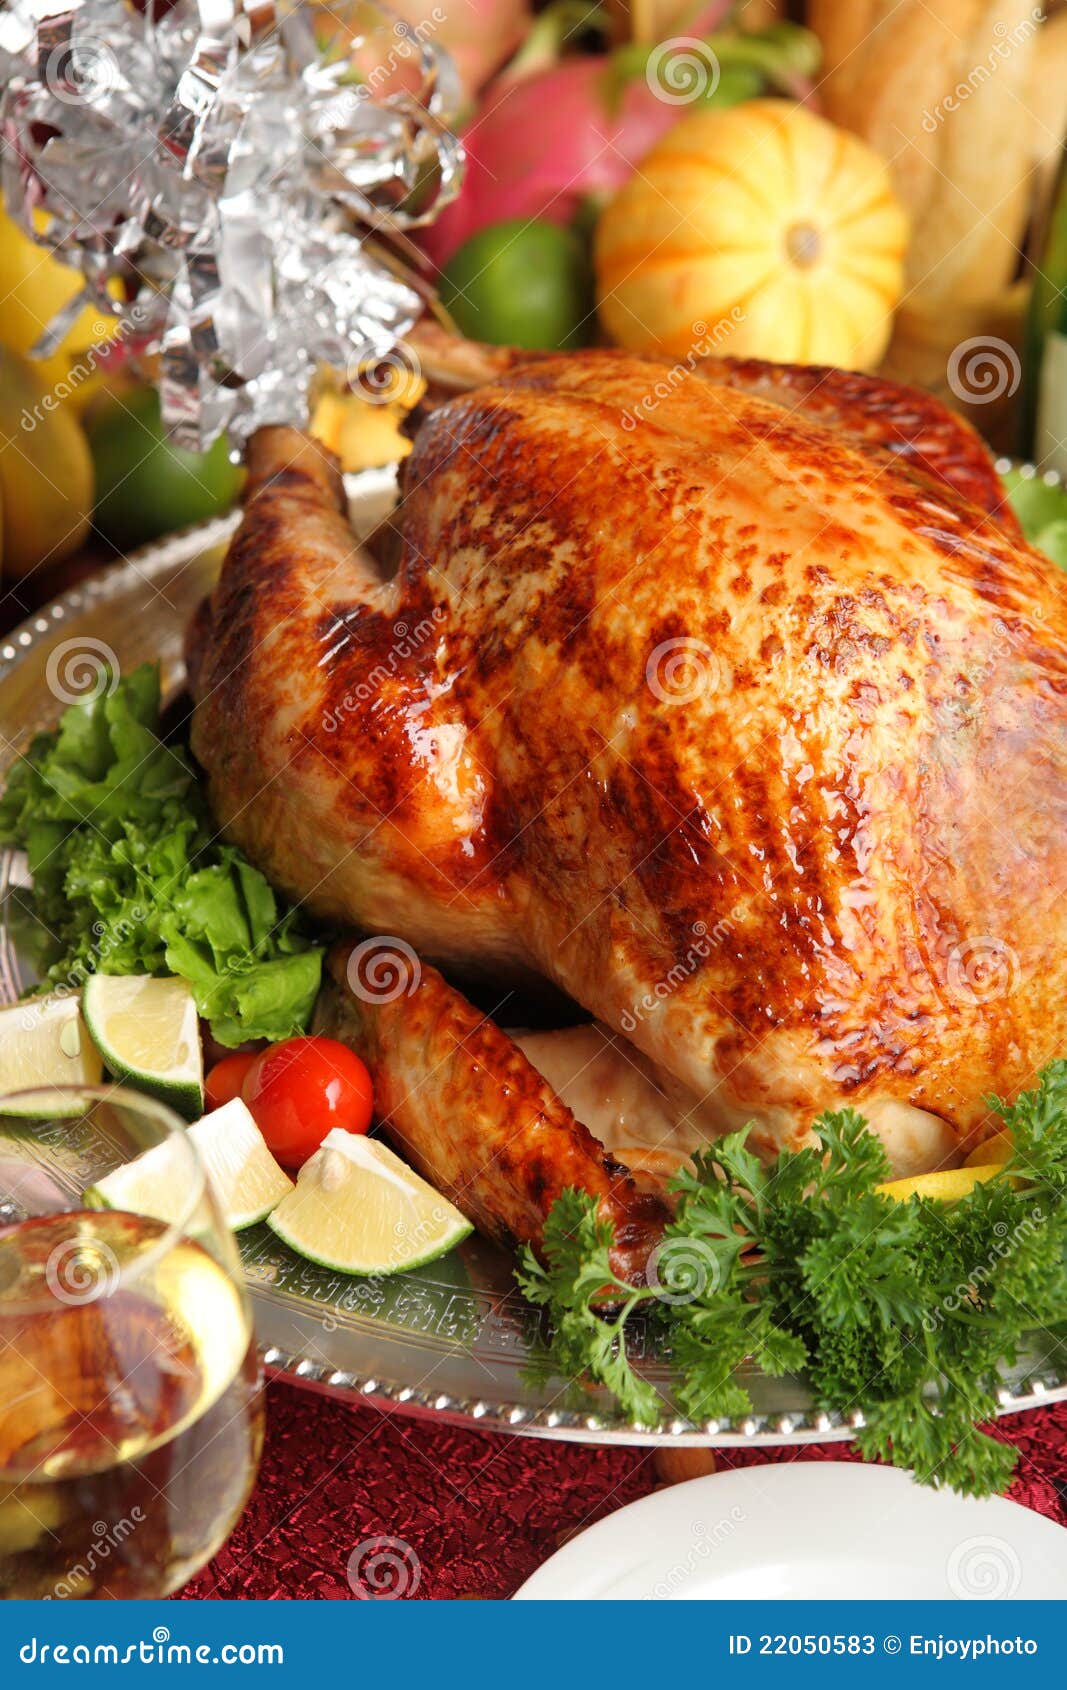 Roast Turkey stock image. Image of culture, food, tomato - 22050583